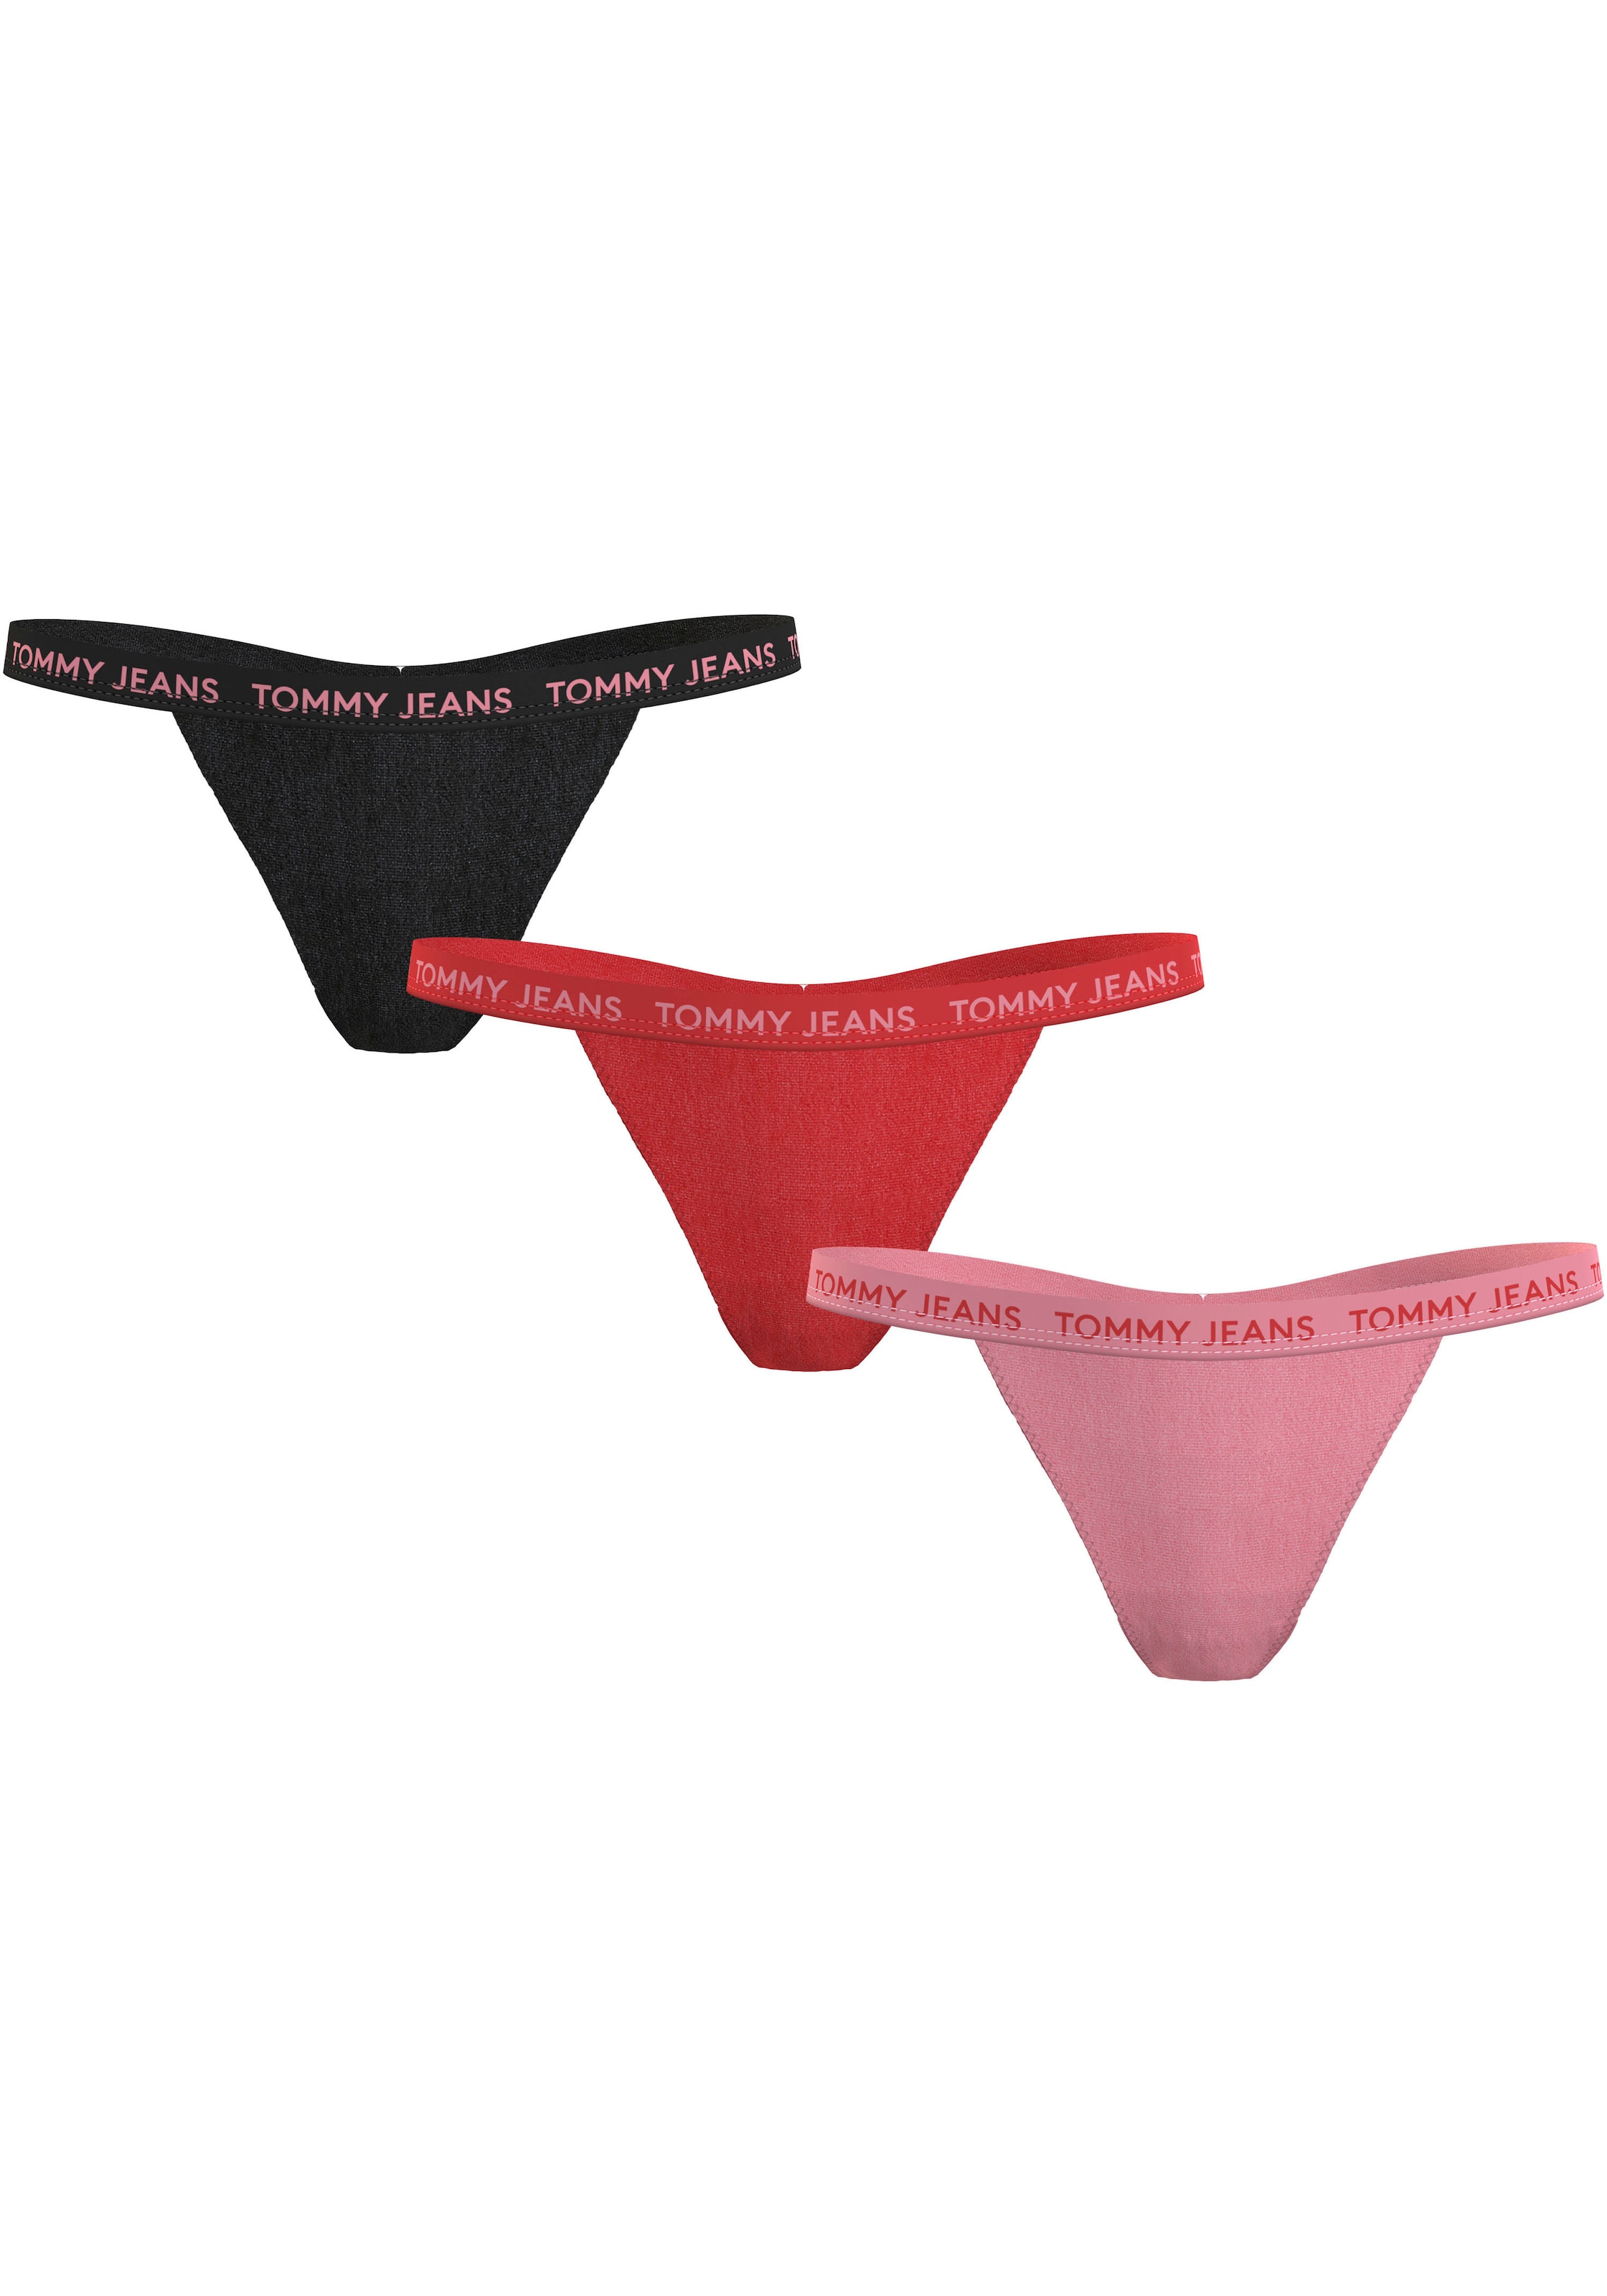 TOMMY HILFIGER Underwear Stringai »3P stringai THONG« (Packung ...